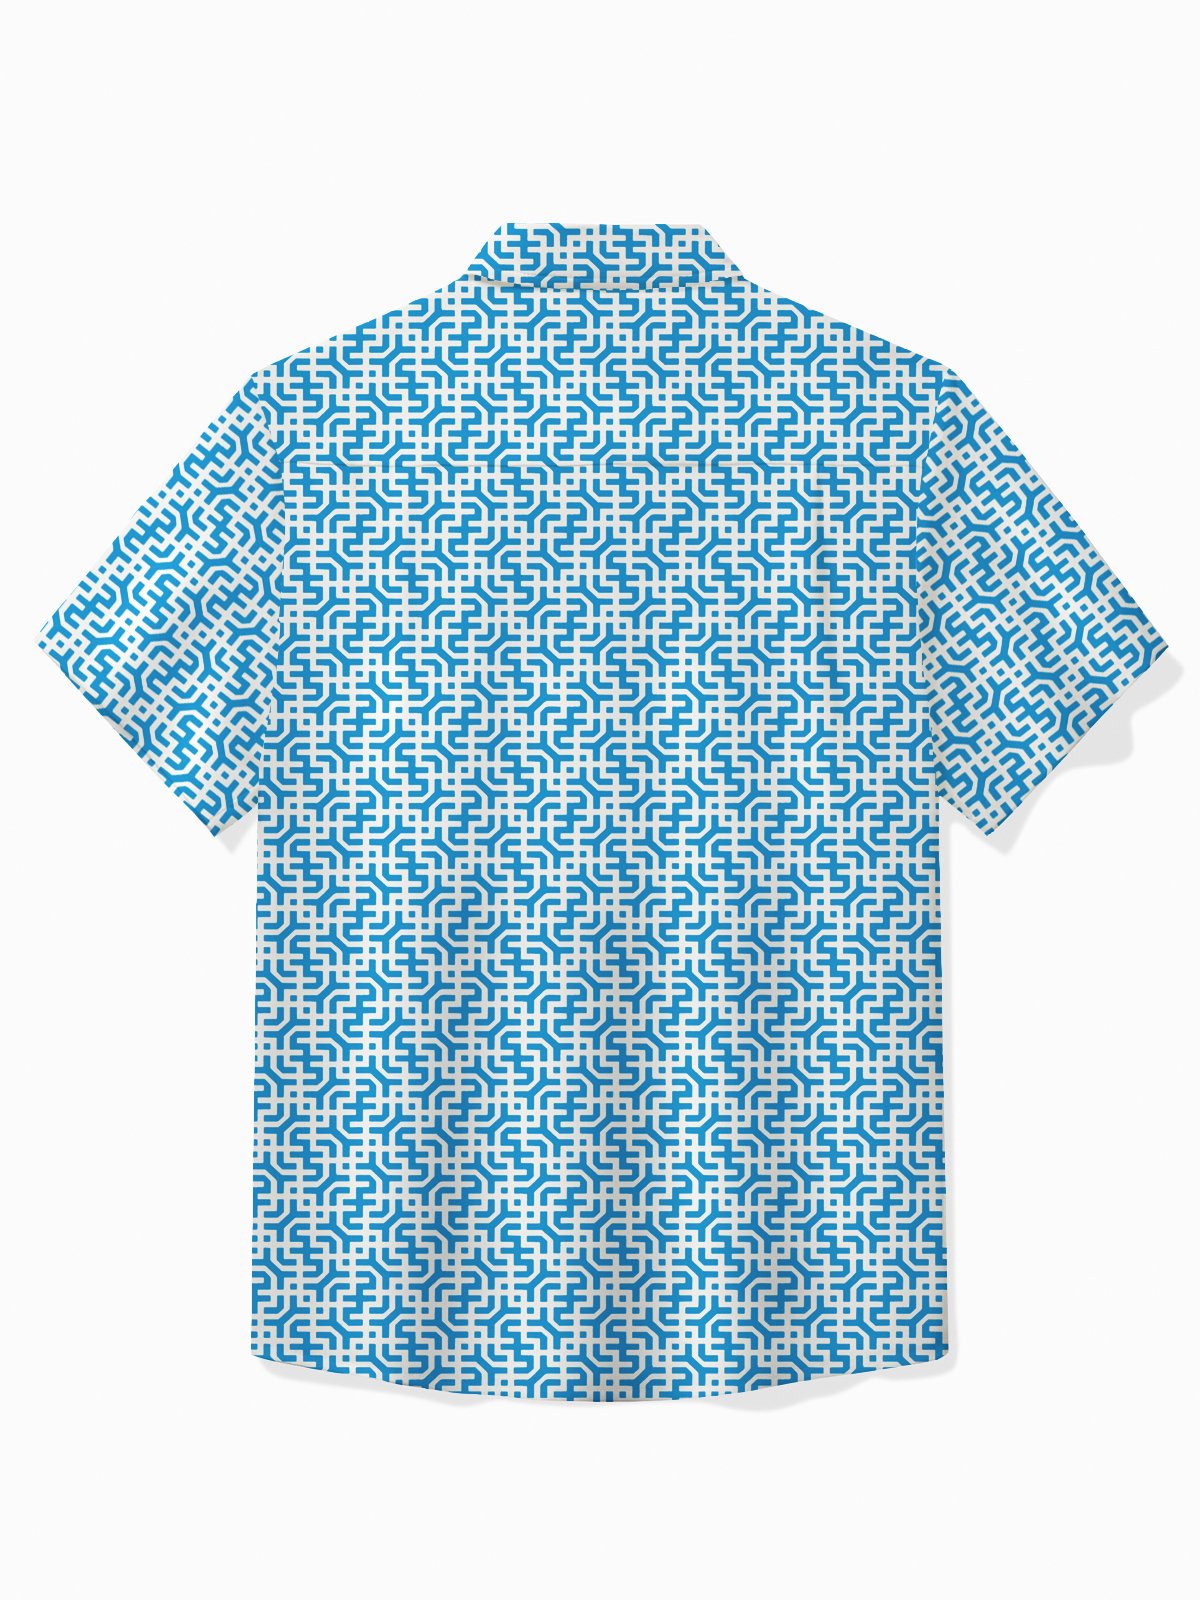 Royaura® Basic Men's Vintage Shirt Geometric Print Oversized Stretch Pocket Shirt